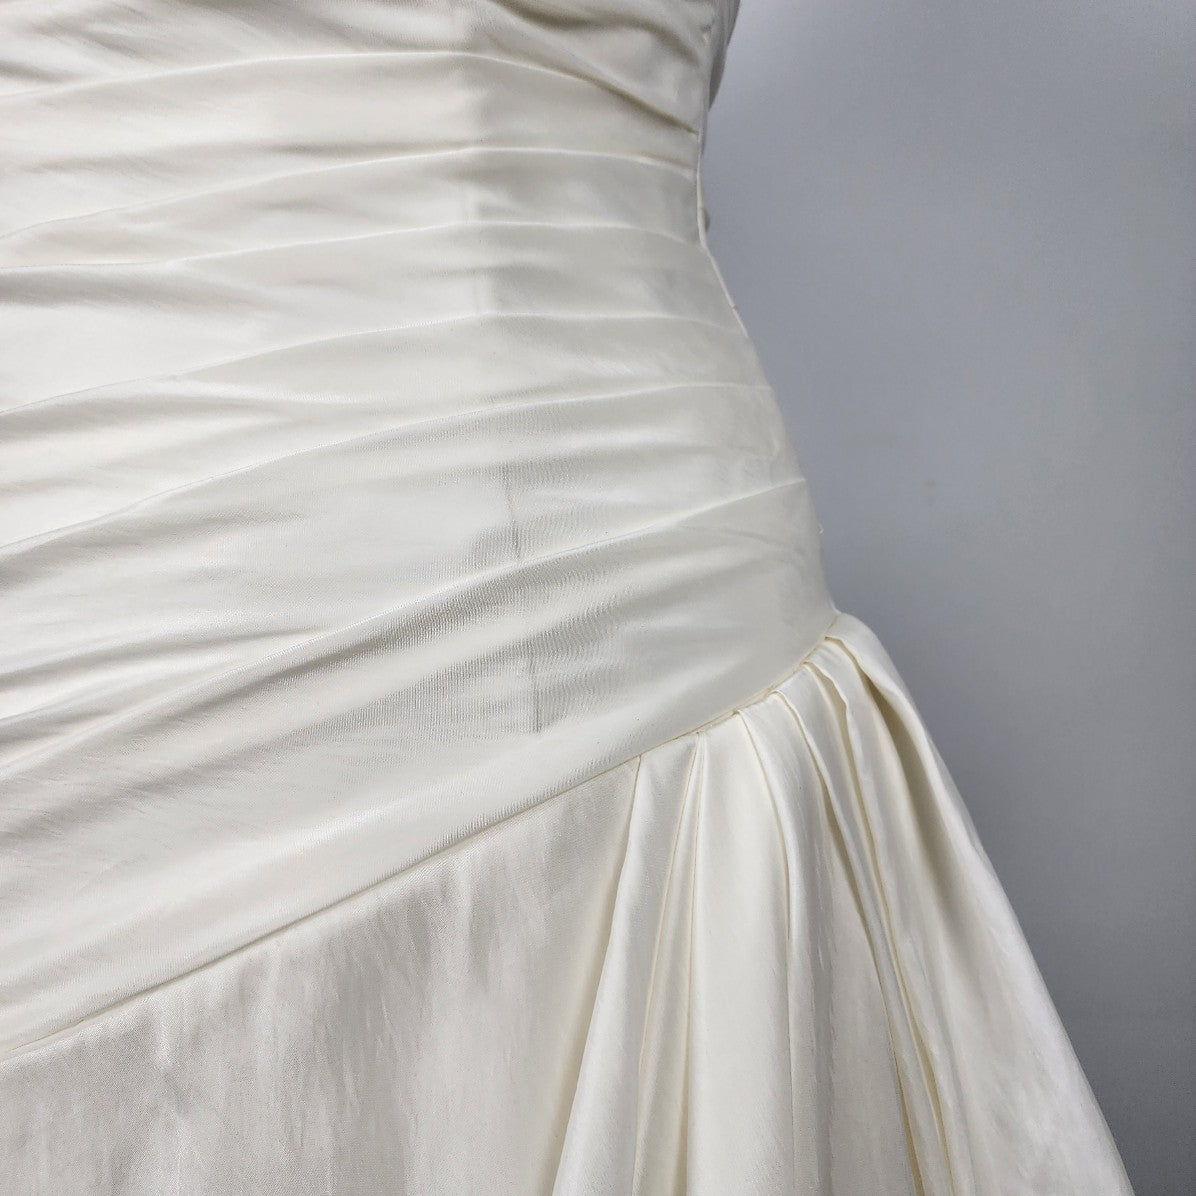 Jasmine Ivory Lace Satin Wedding Gown Size 16